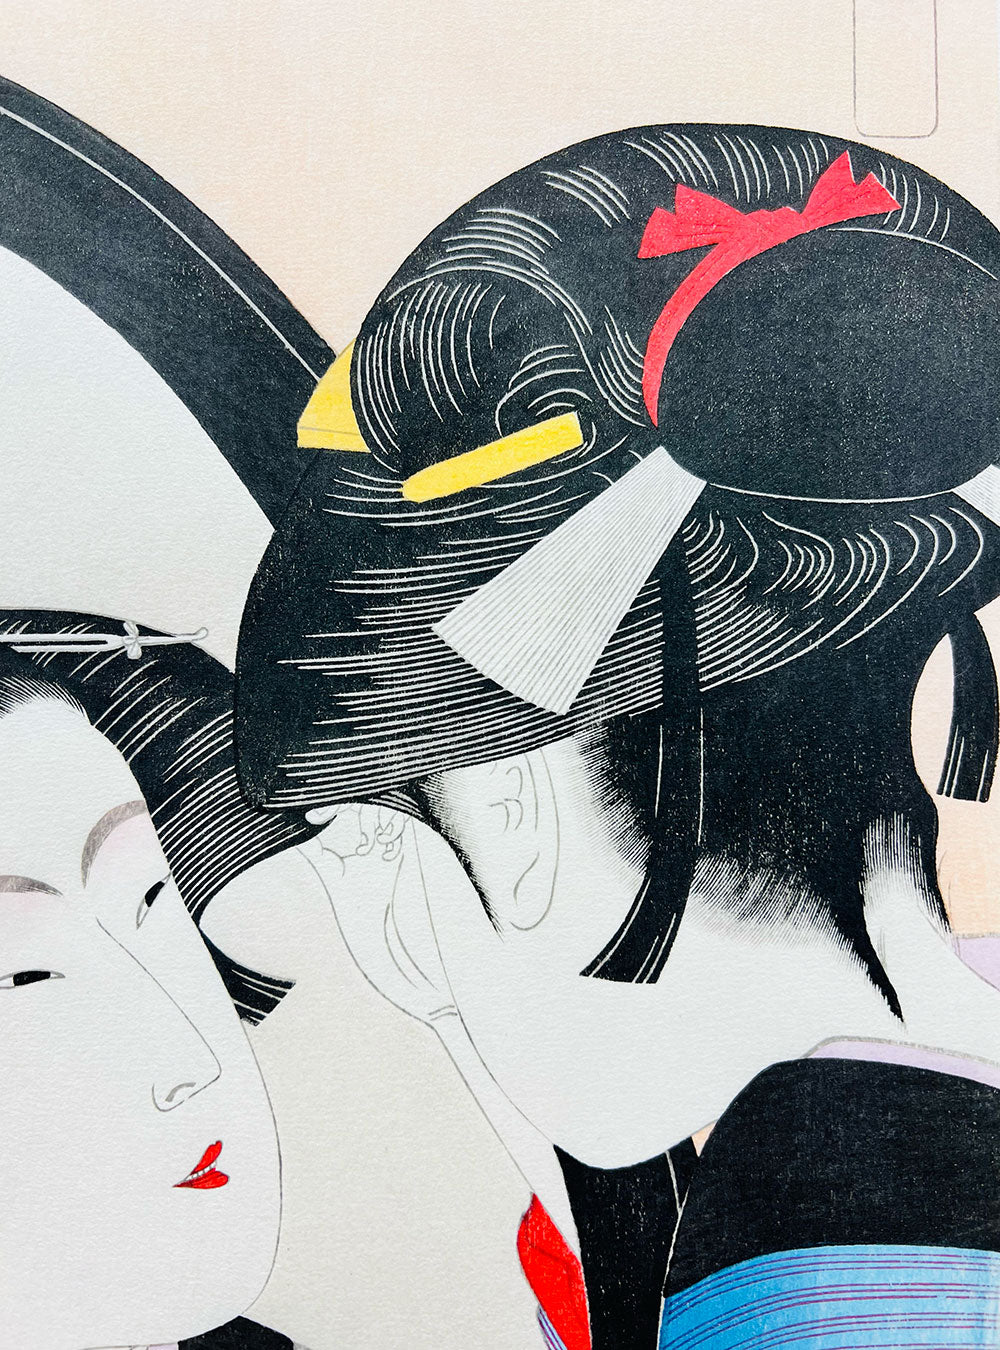 Woodblock print "Seven Women Applying Make-up Using a Mirror" by Utamaro published by Uchida art